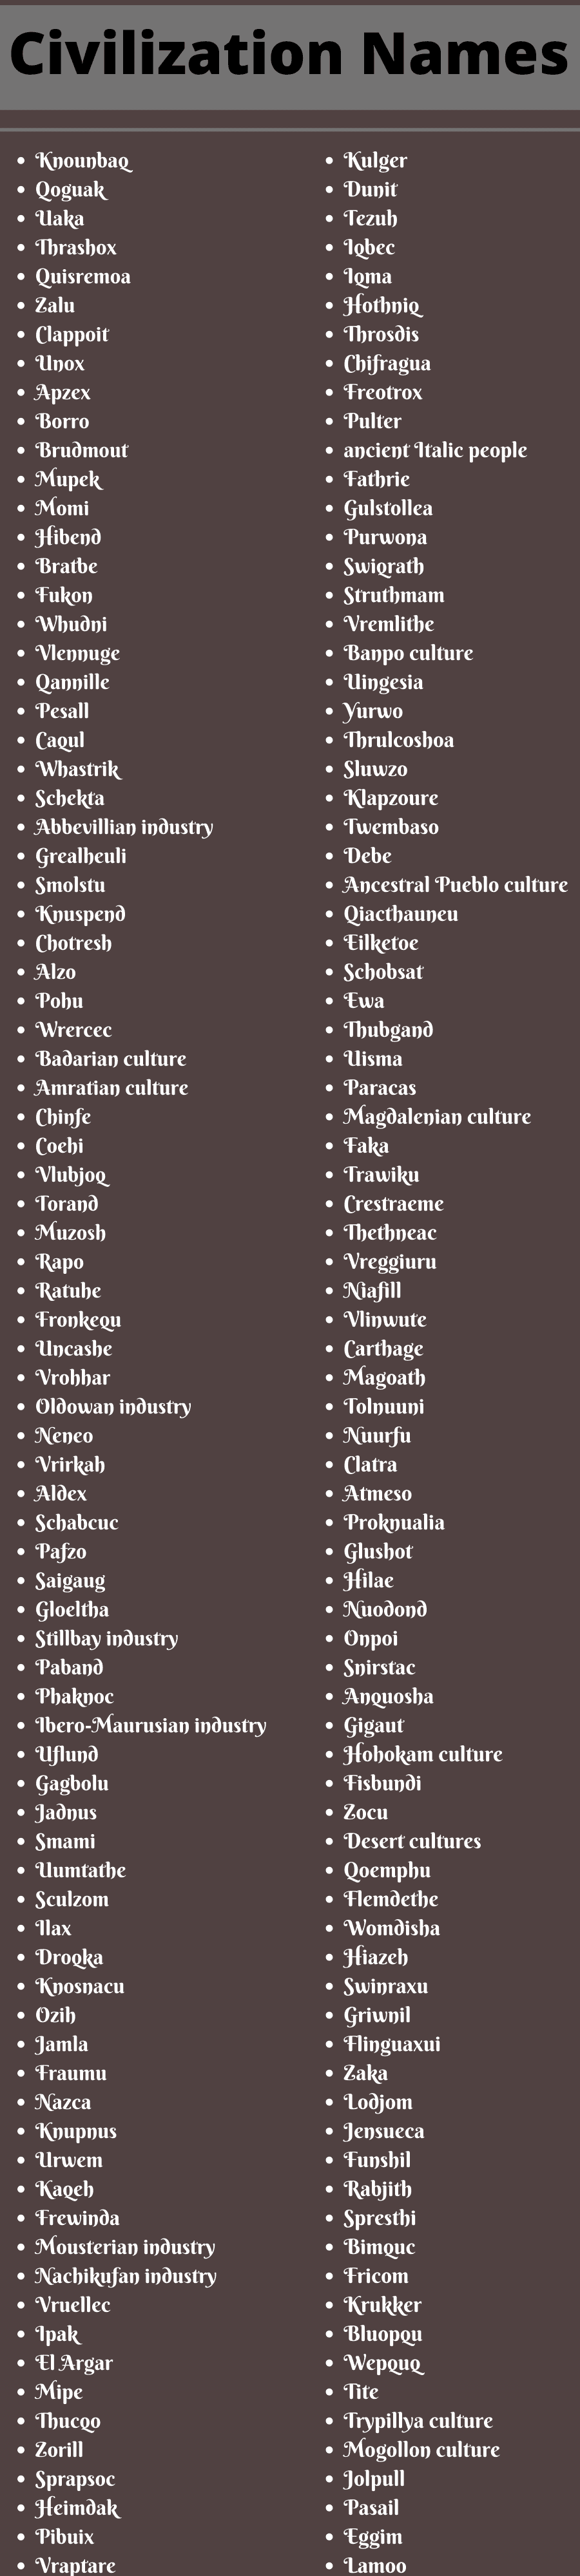 Civilization Names 